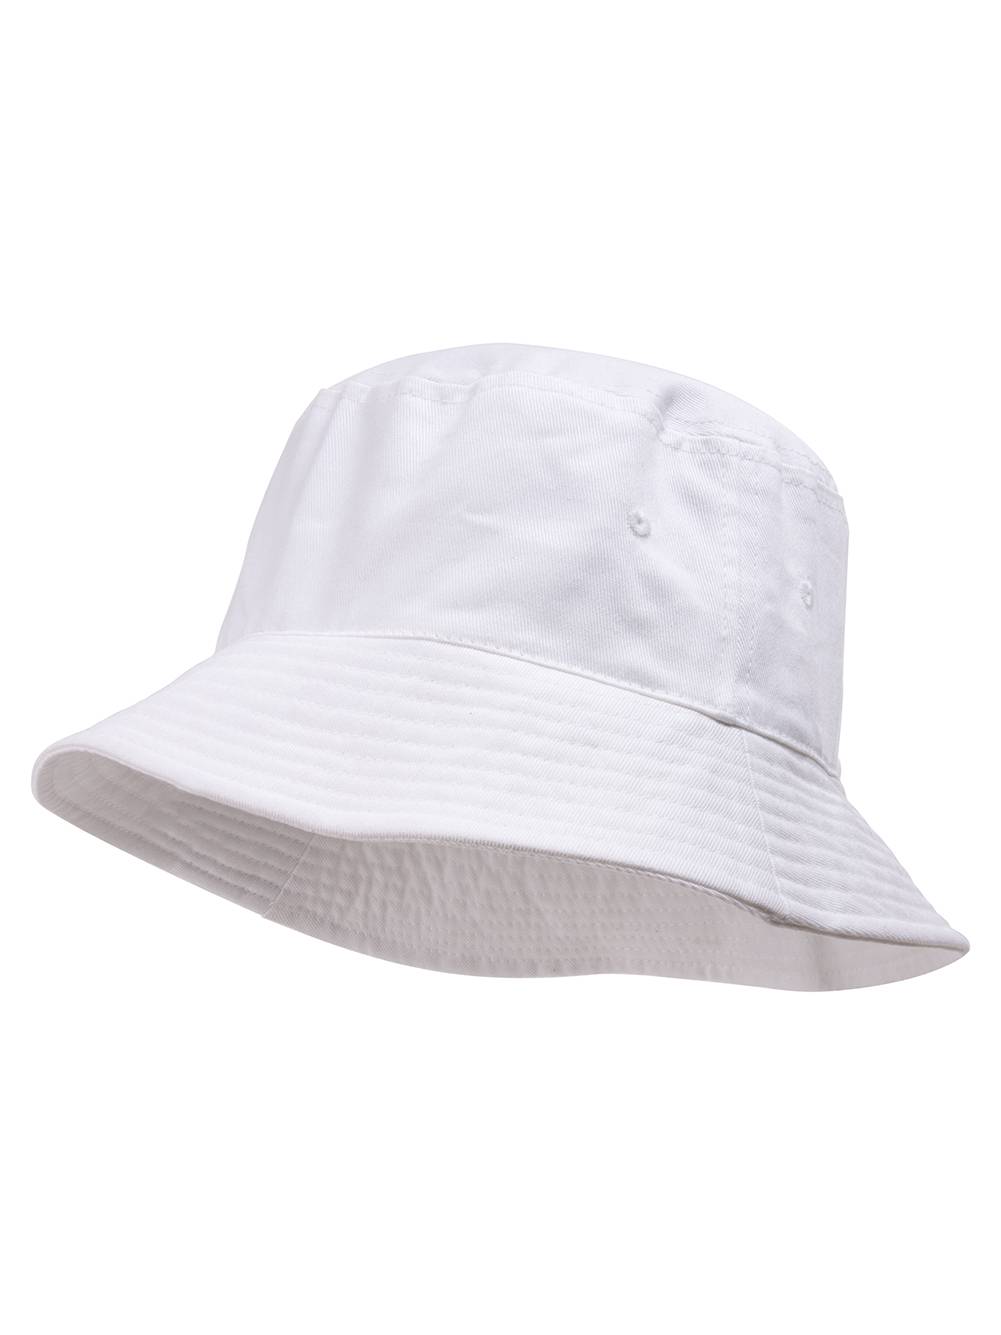 Bucket Hat For Men Women - Cotton Packable Fishing Cap, White L/XL - image 1 of 3